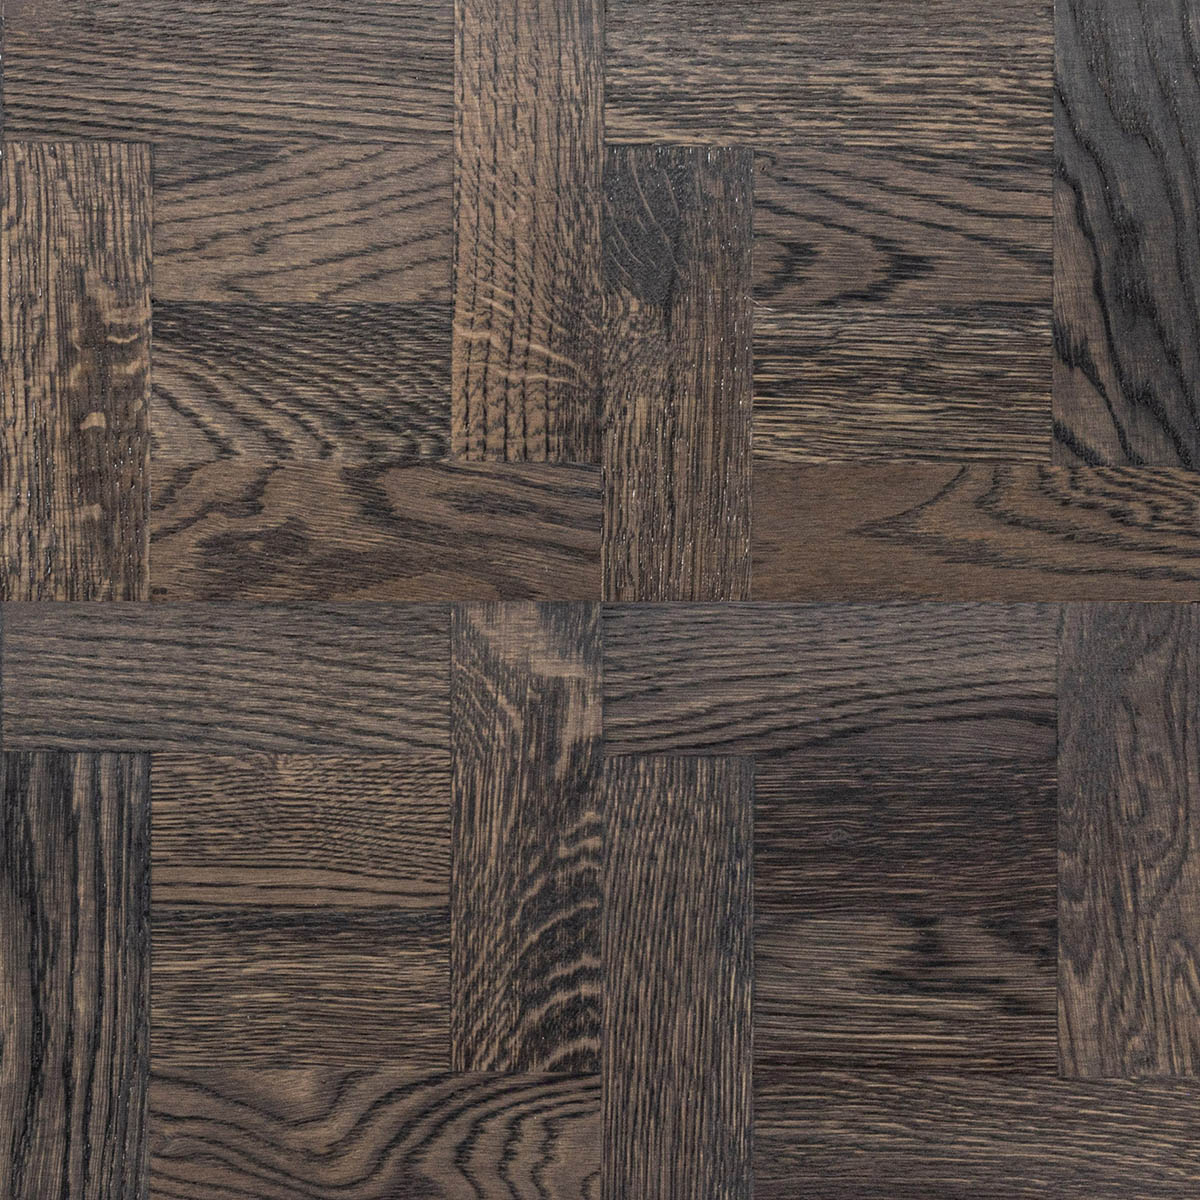 Longleat Lane - Geometric wood floor from JackEvie